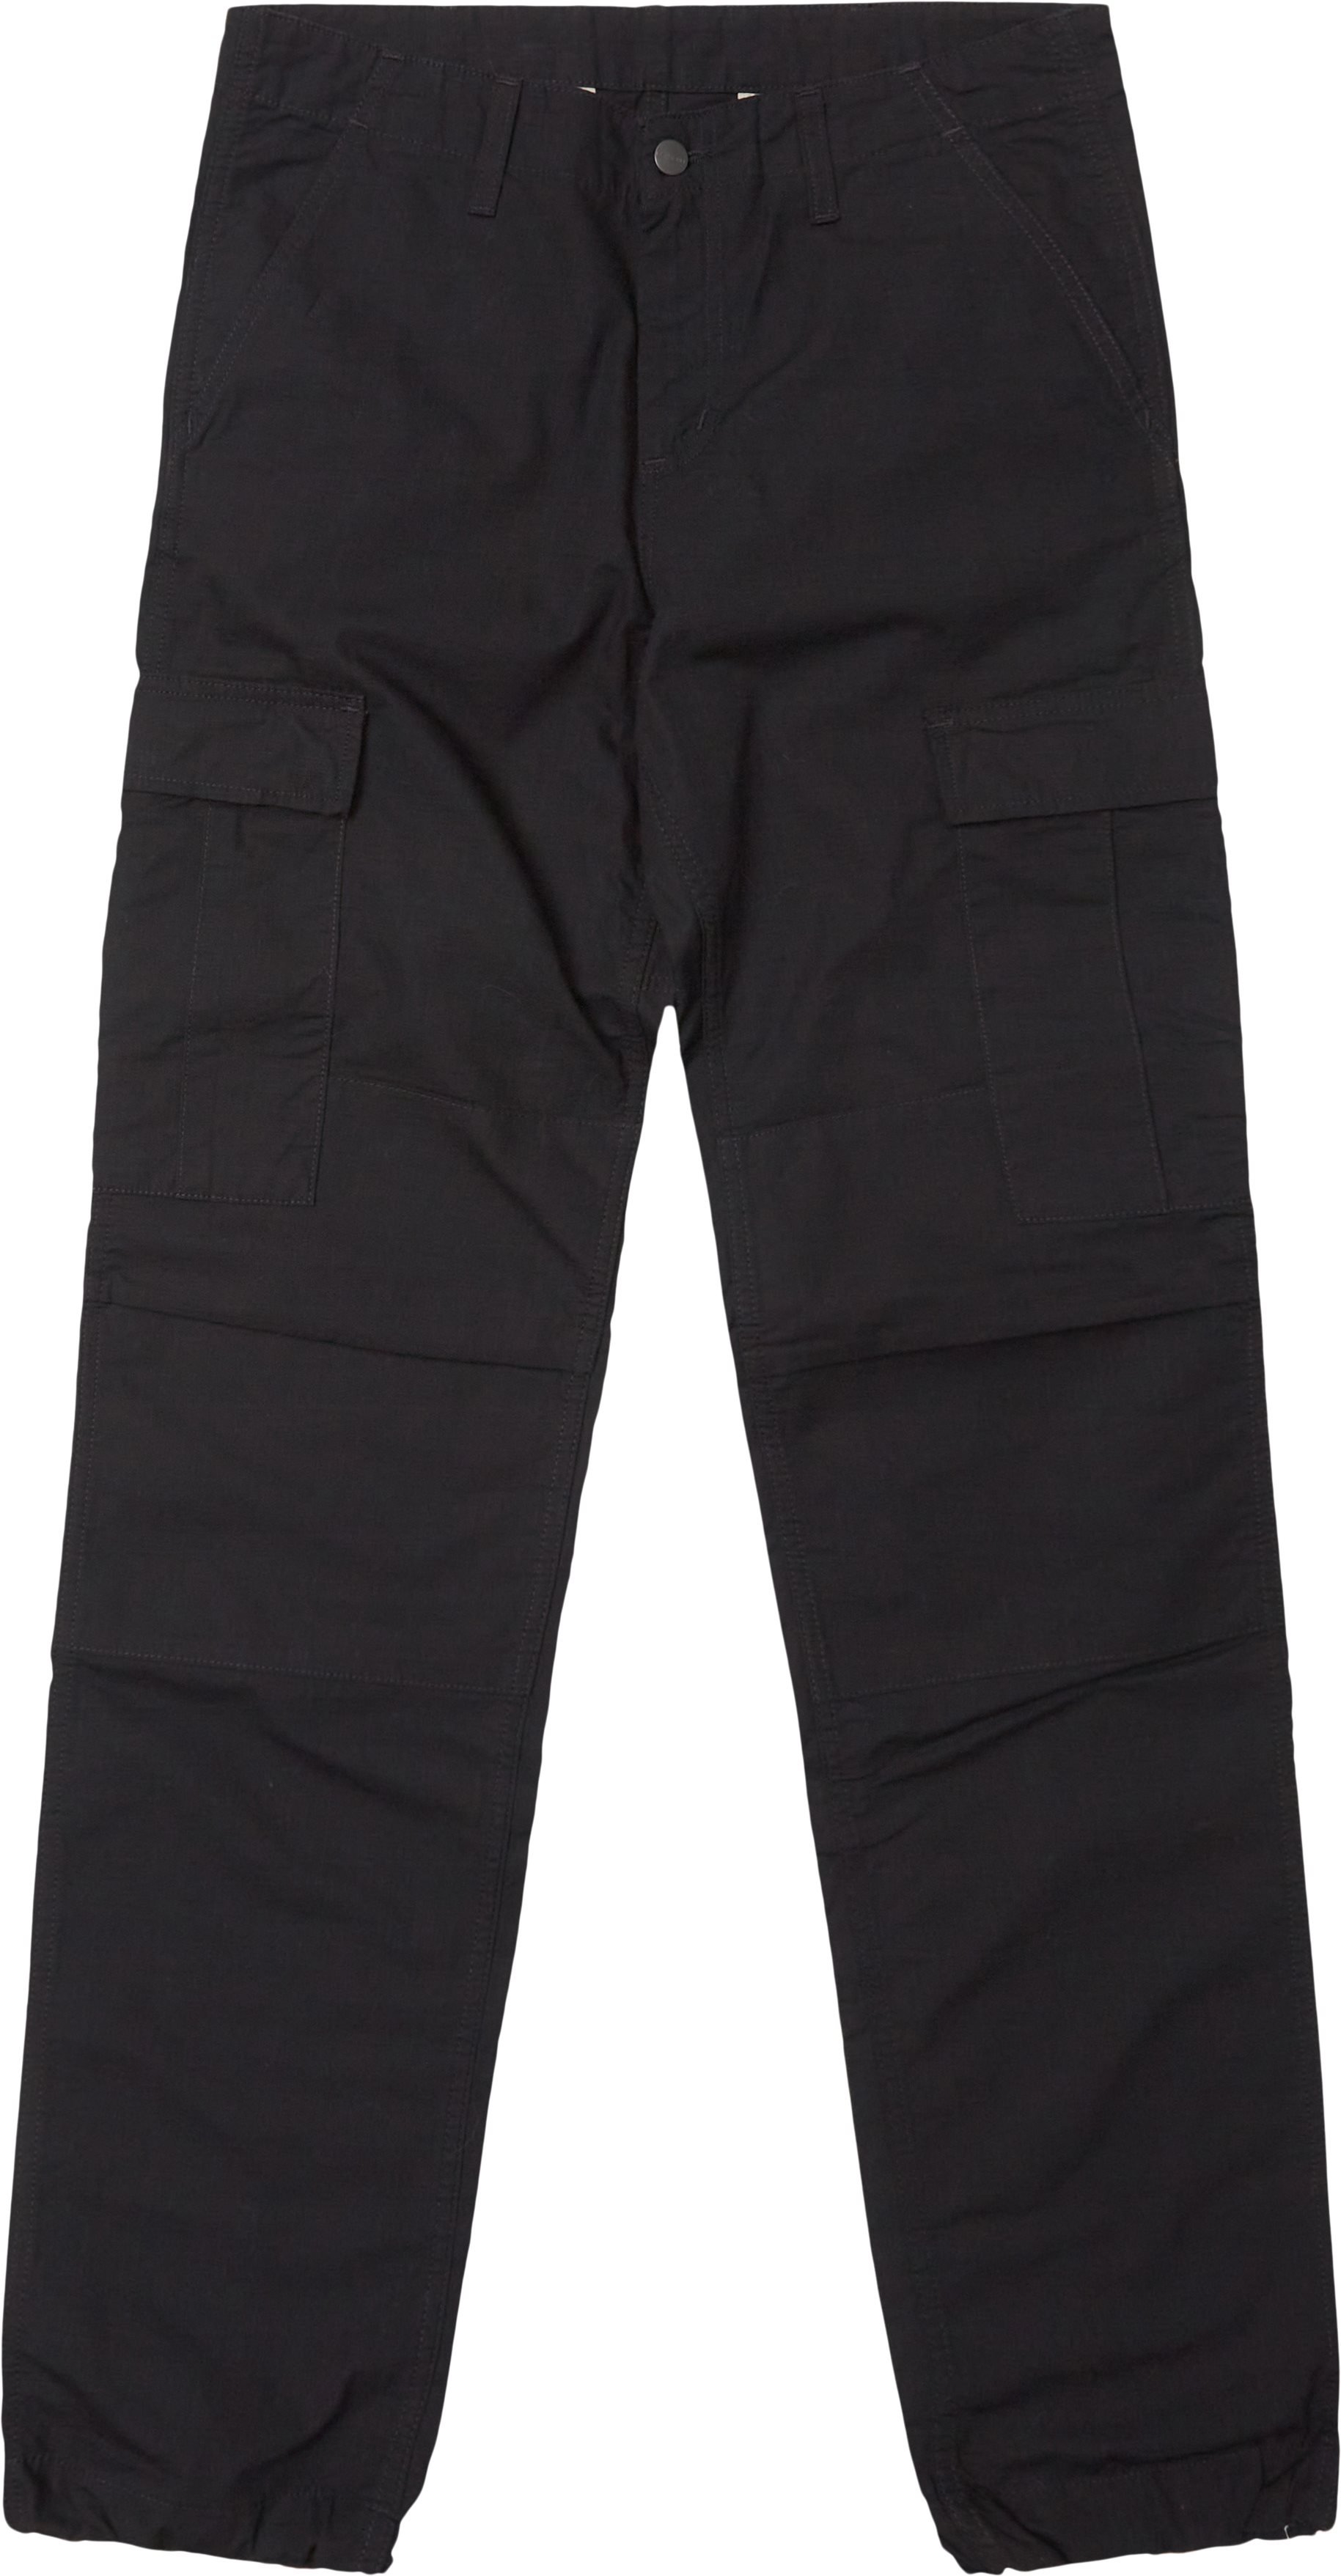 Cargo Pants I015875 - Trousers - Regular fit - Black